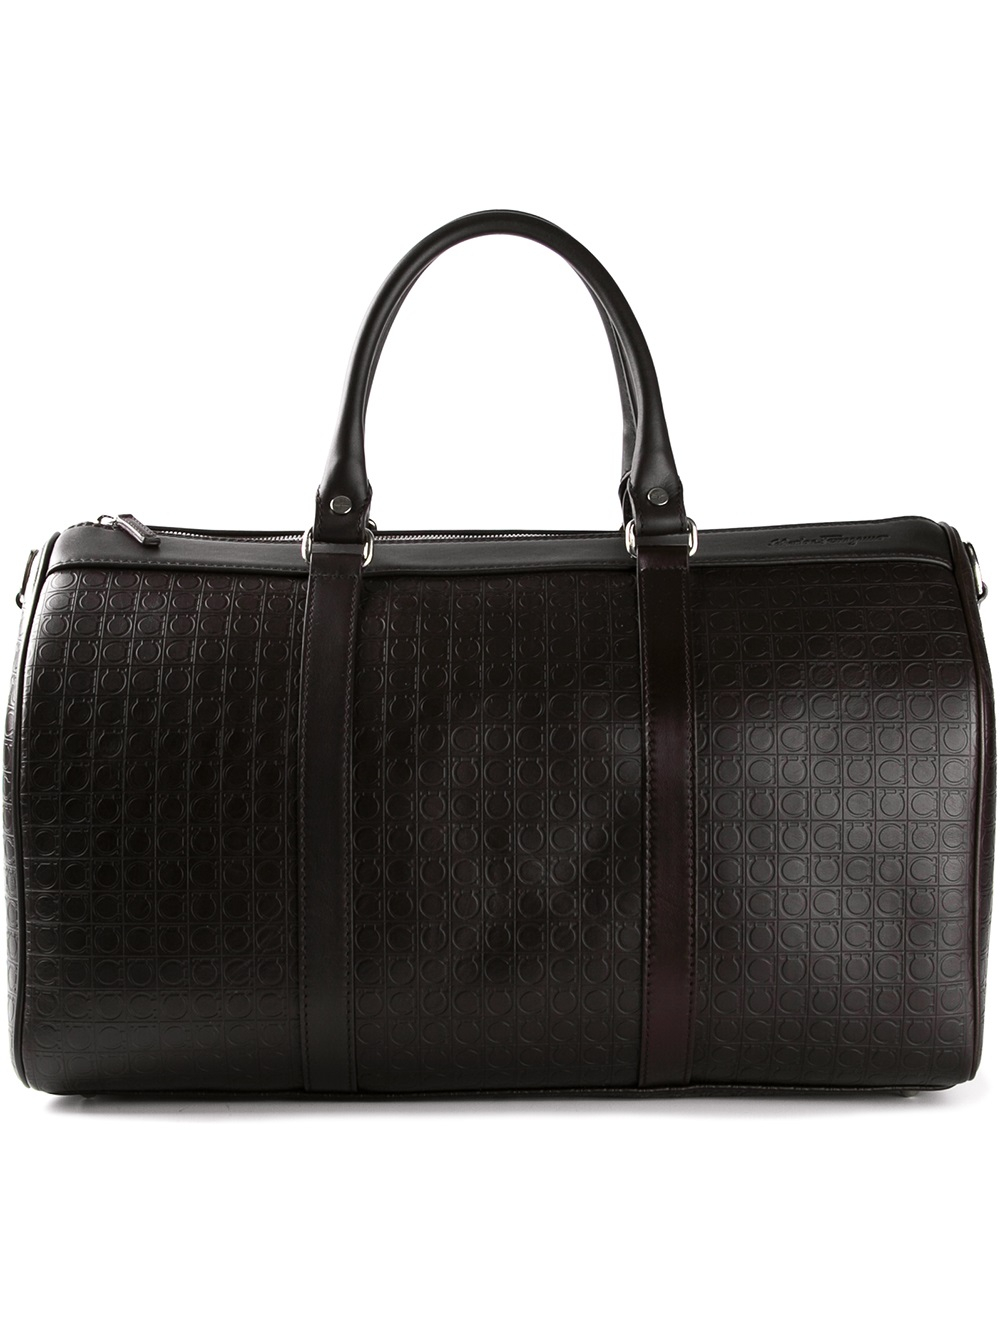 Lyst - Ferragamo Duffle Bag in Brown for Men